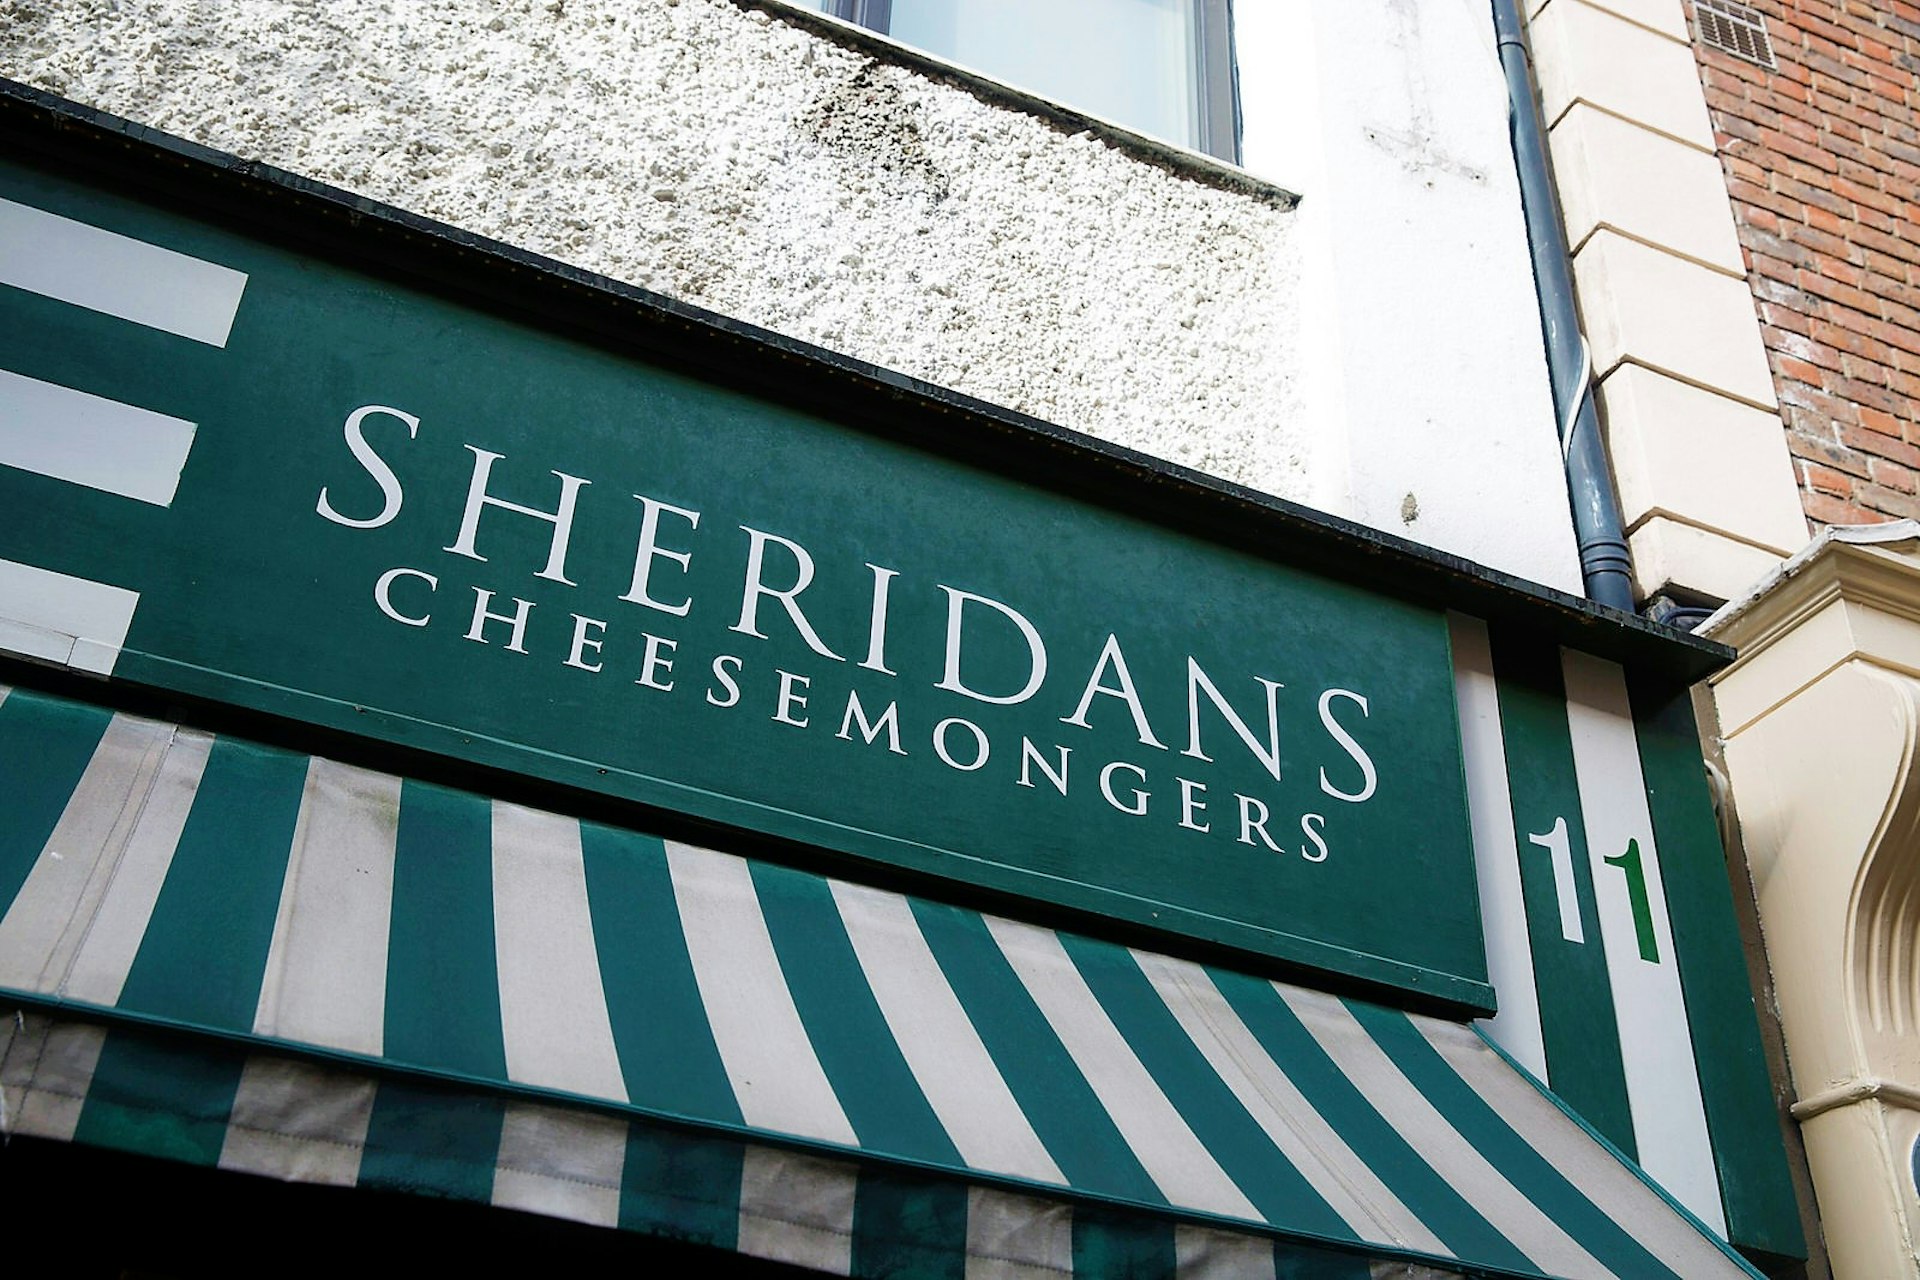 Sheridans cheesemongers